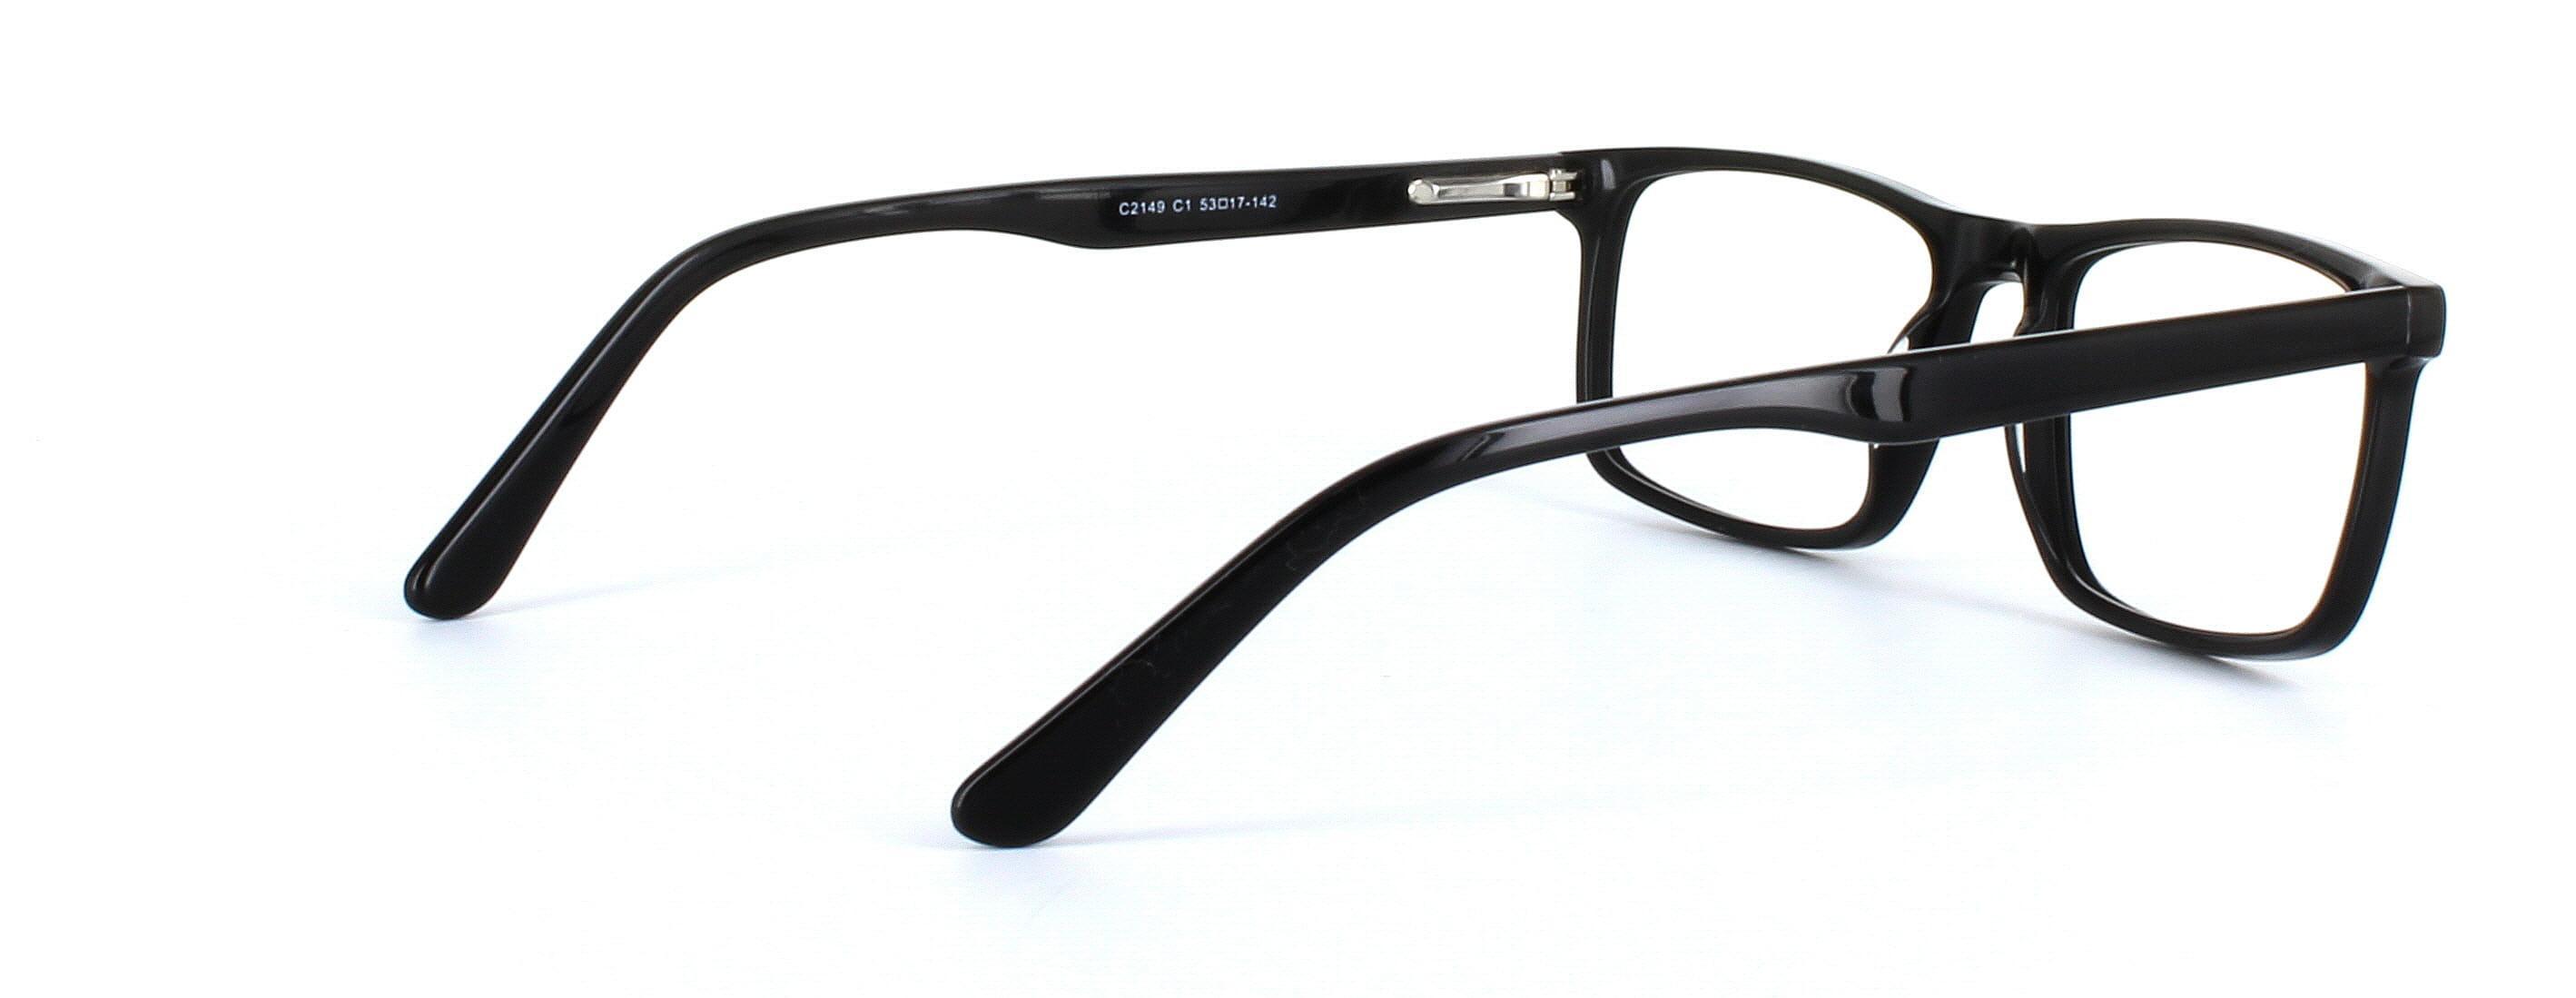 Livadia in shiny black - unisex acetate glasses - image view 4